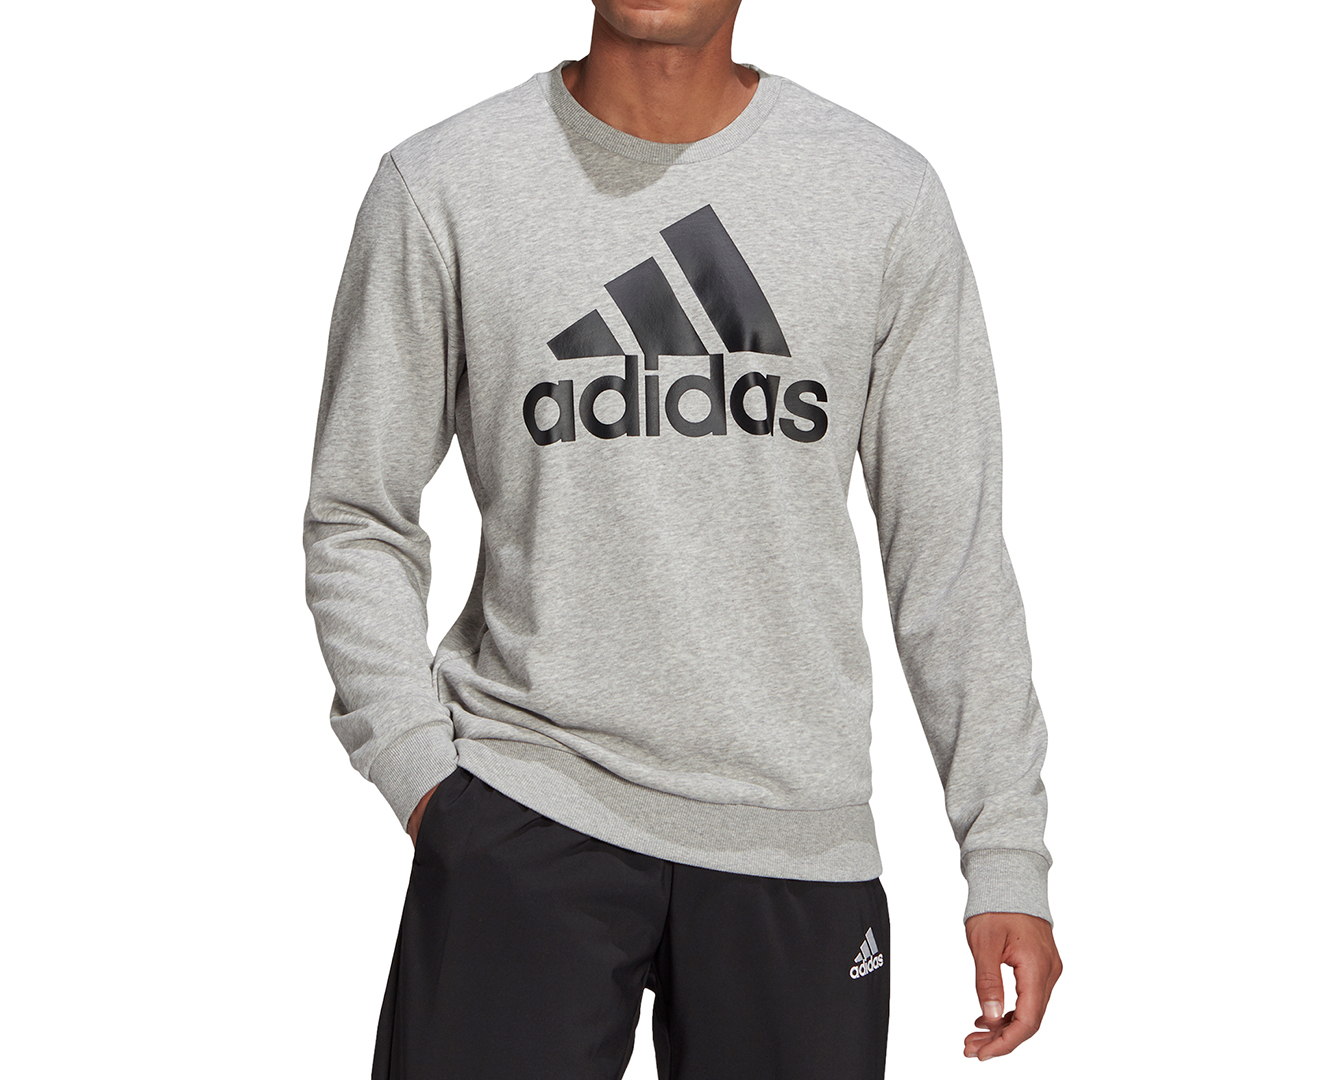 adidas Men's Essentials Big Logo Sweatshirt - Medium Gray Heather/Black |  Catch.com.au